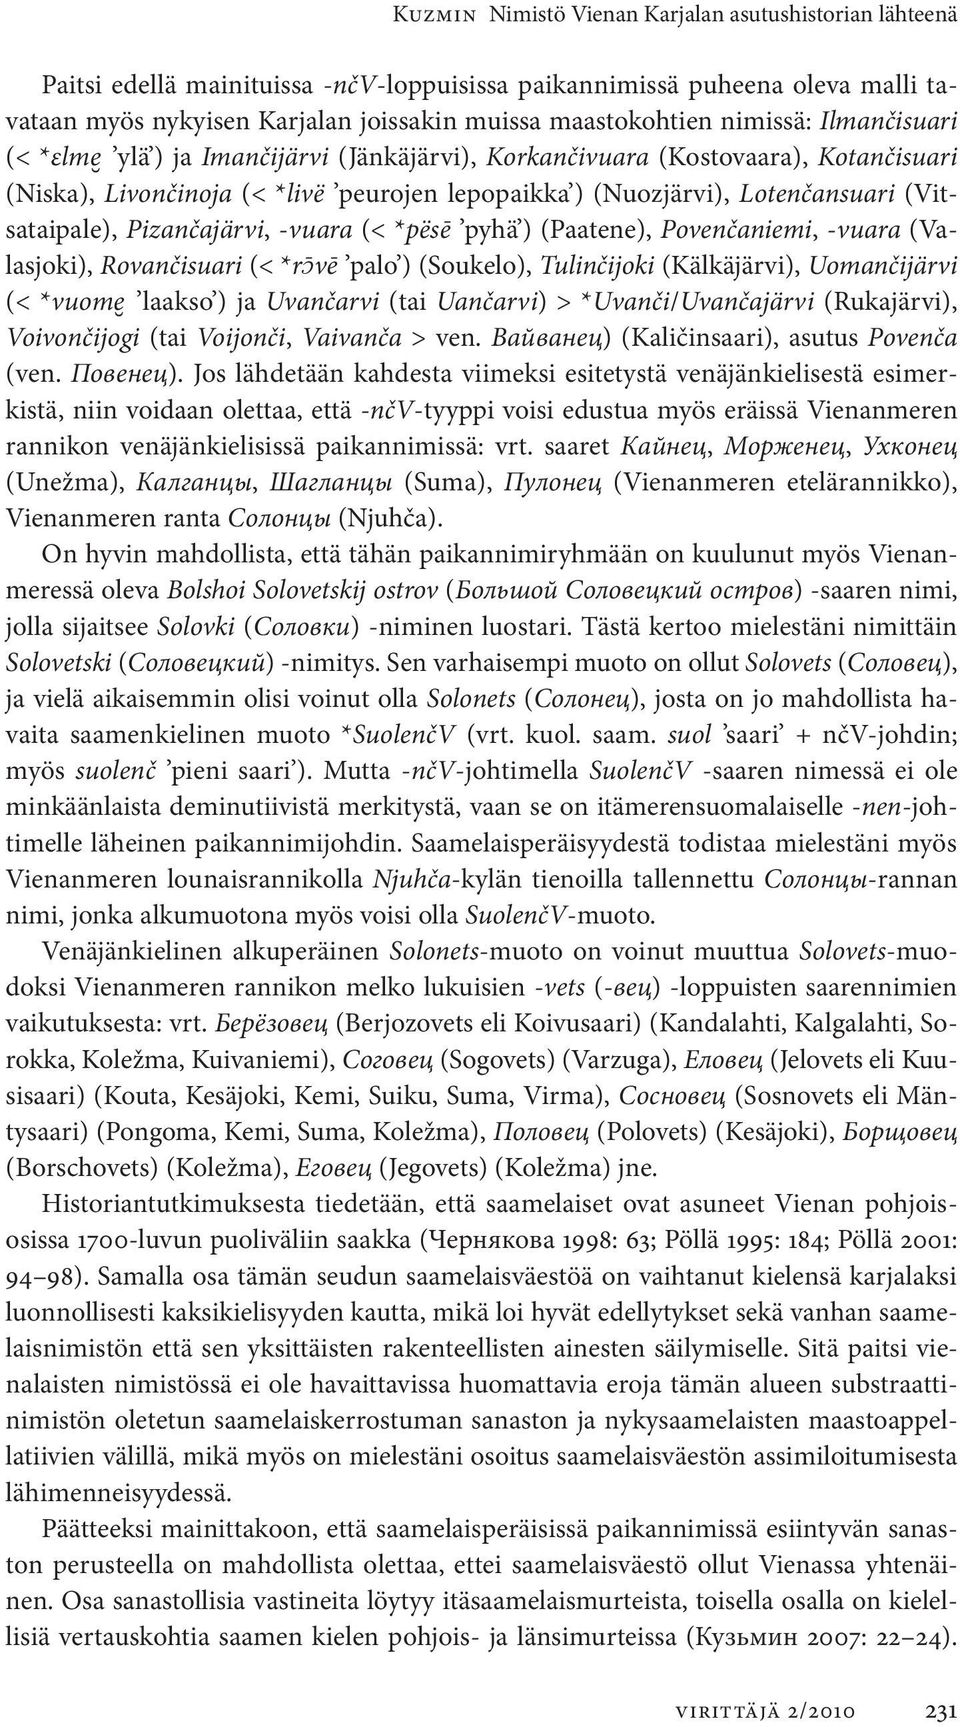 (Vitsataipale), Pizančajärvi, -vuara (< *pësē pyhä ) (Paatene), Povenčaniemi, -vuara (Valasjoki), Rovančisuari (< *r ɔvē palo ) (Soukelo), Tulinčijoki (Kälkäjärvi), Uomančijärvi (< *vuome laakso ) ja